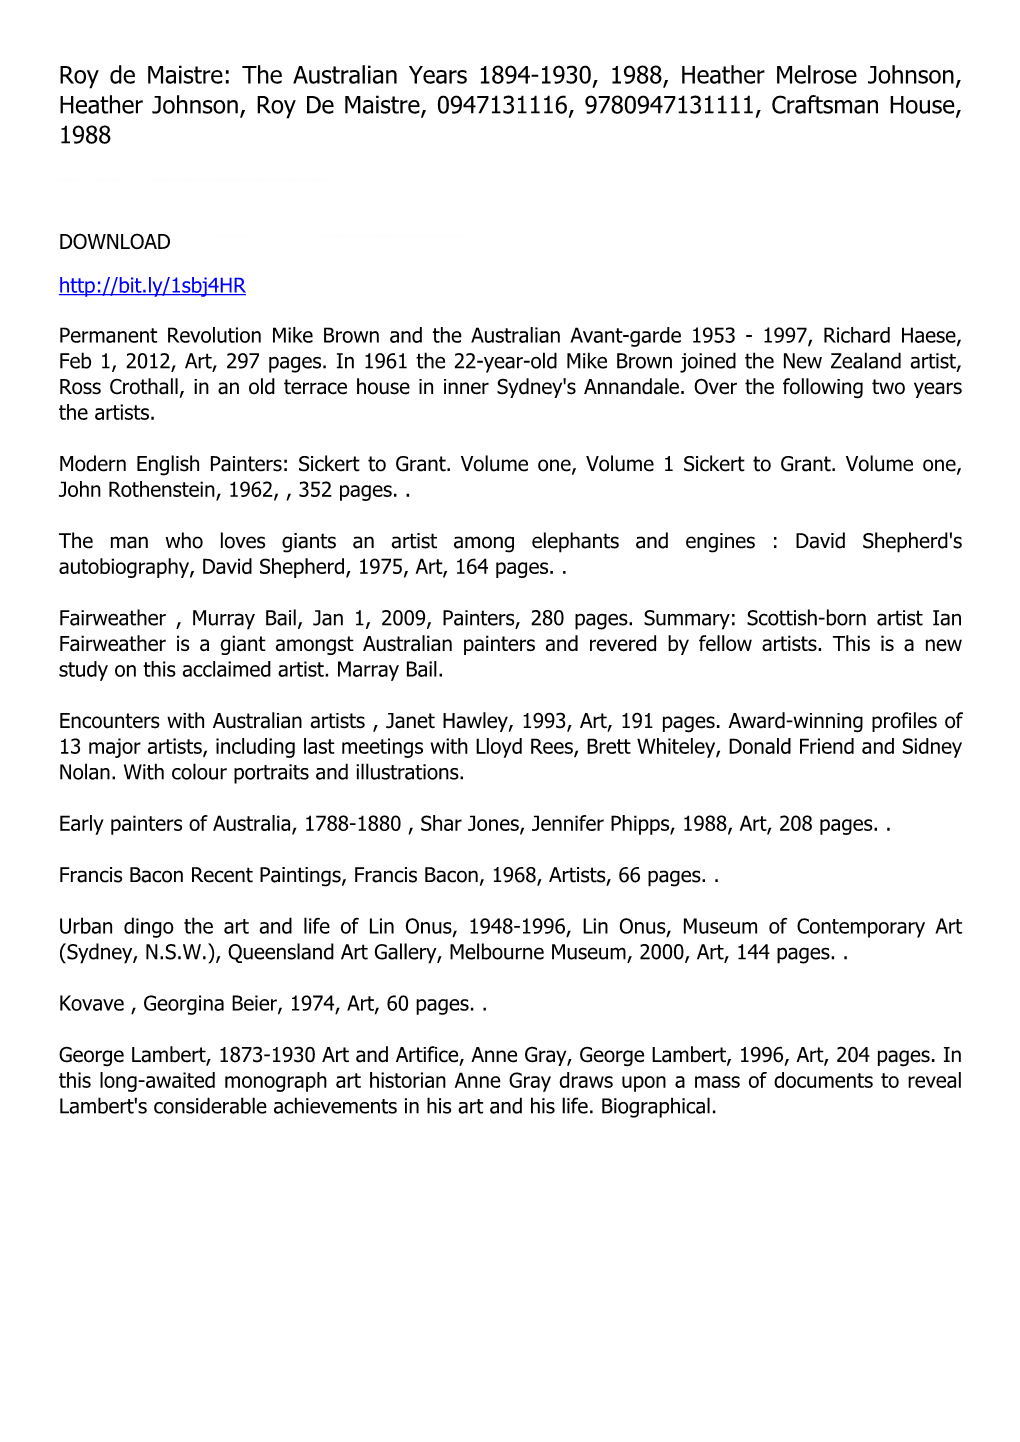 Roy De Maistre: the Australian Years 1894-1930, 1988, Heather Melrose Johnson, Heather Johnson, Roy De Maistre, 0947131116, 9780947131111, Craftsman House, 1988